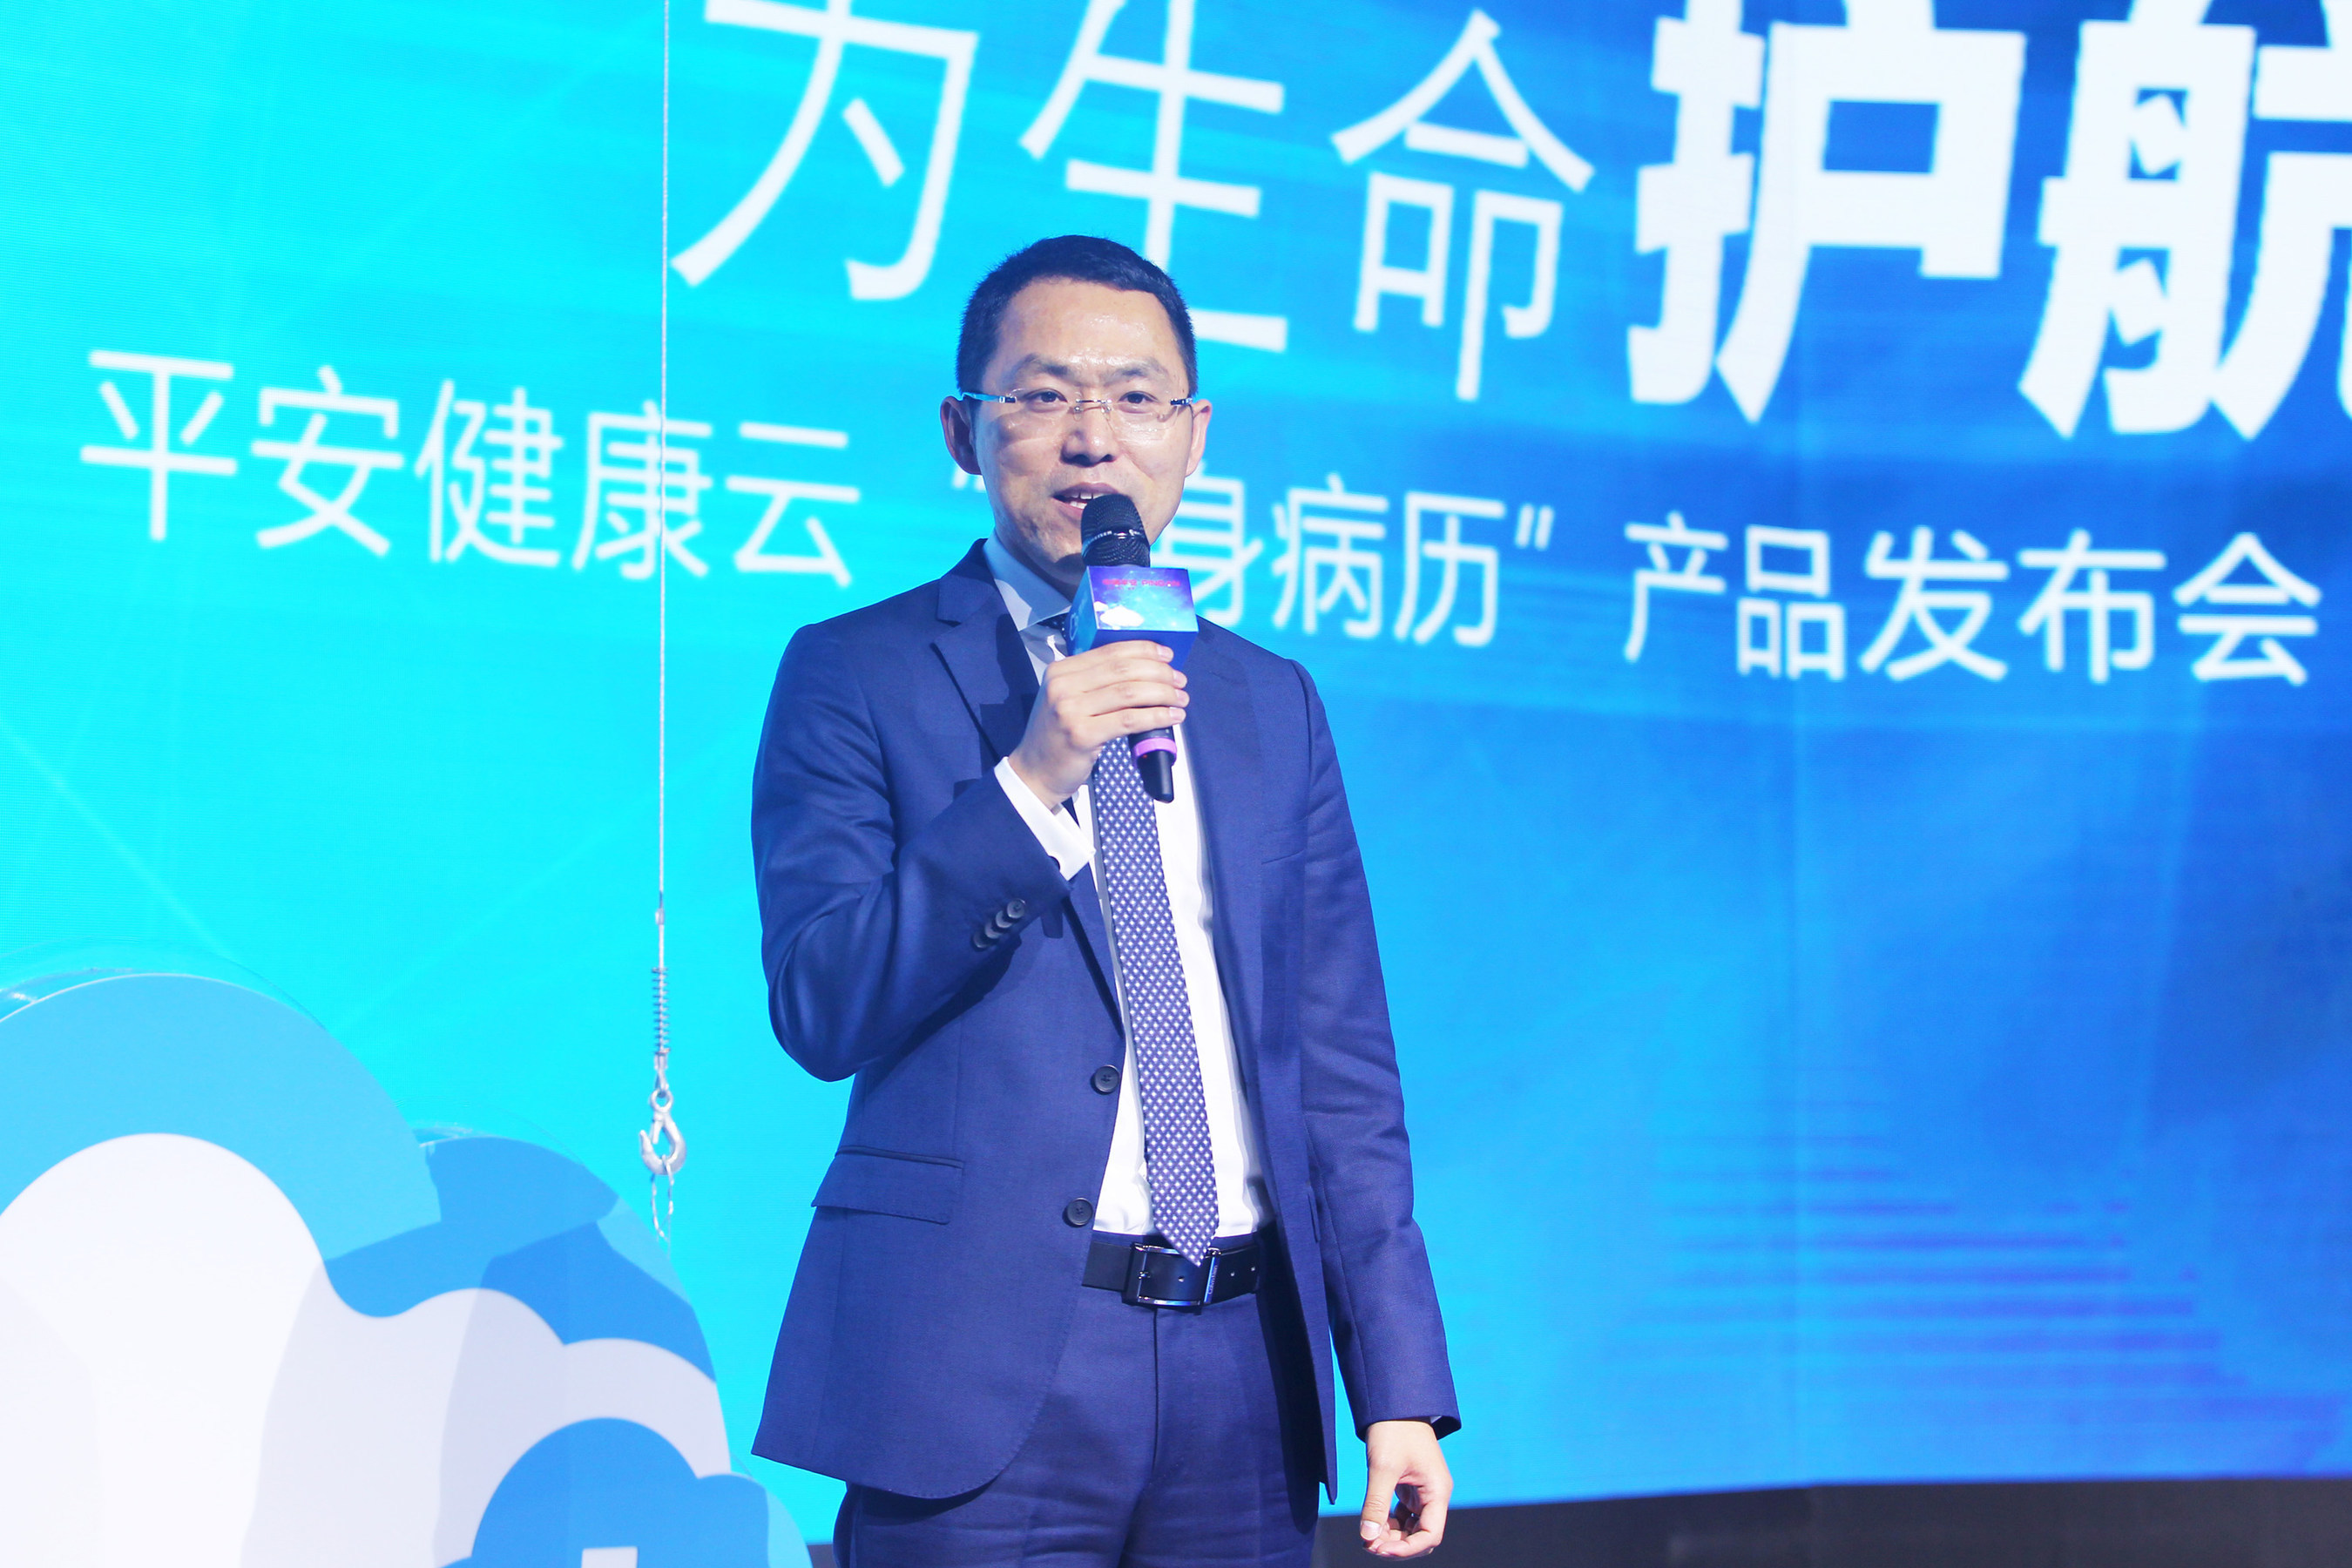 Mr. Li Liang, Chief Strategy Officer of PingAn Tech